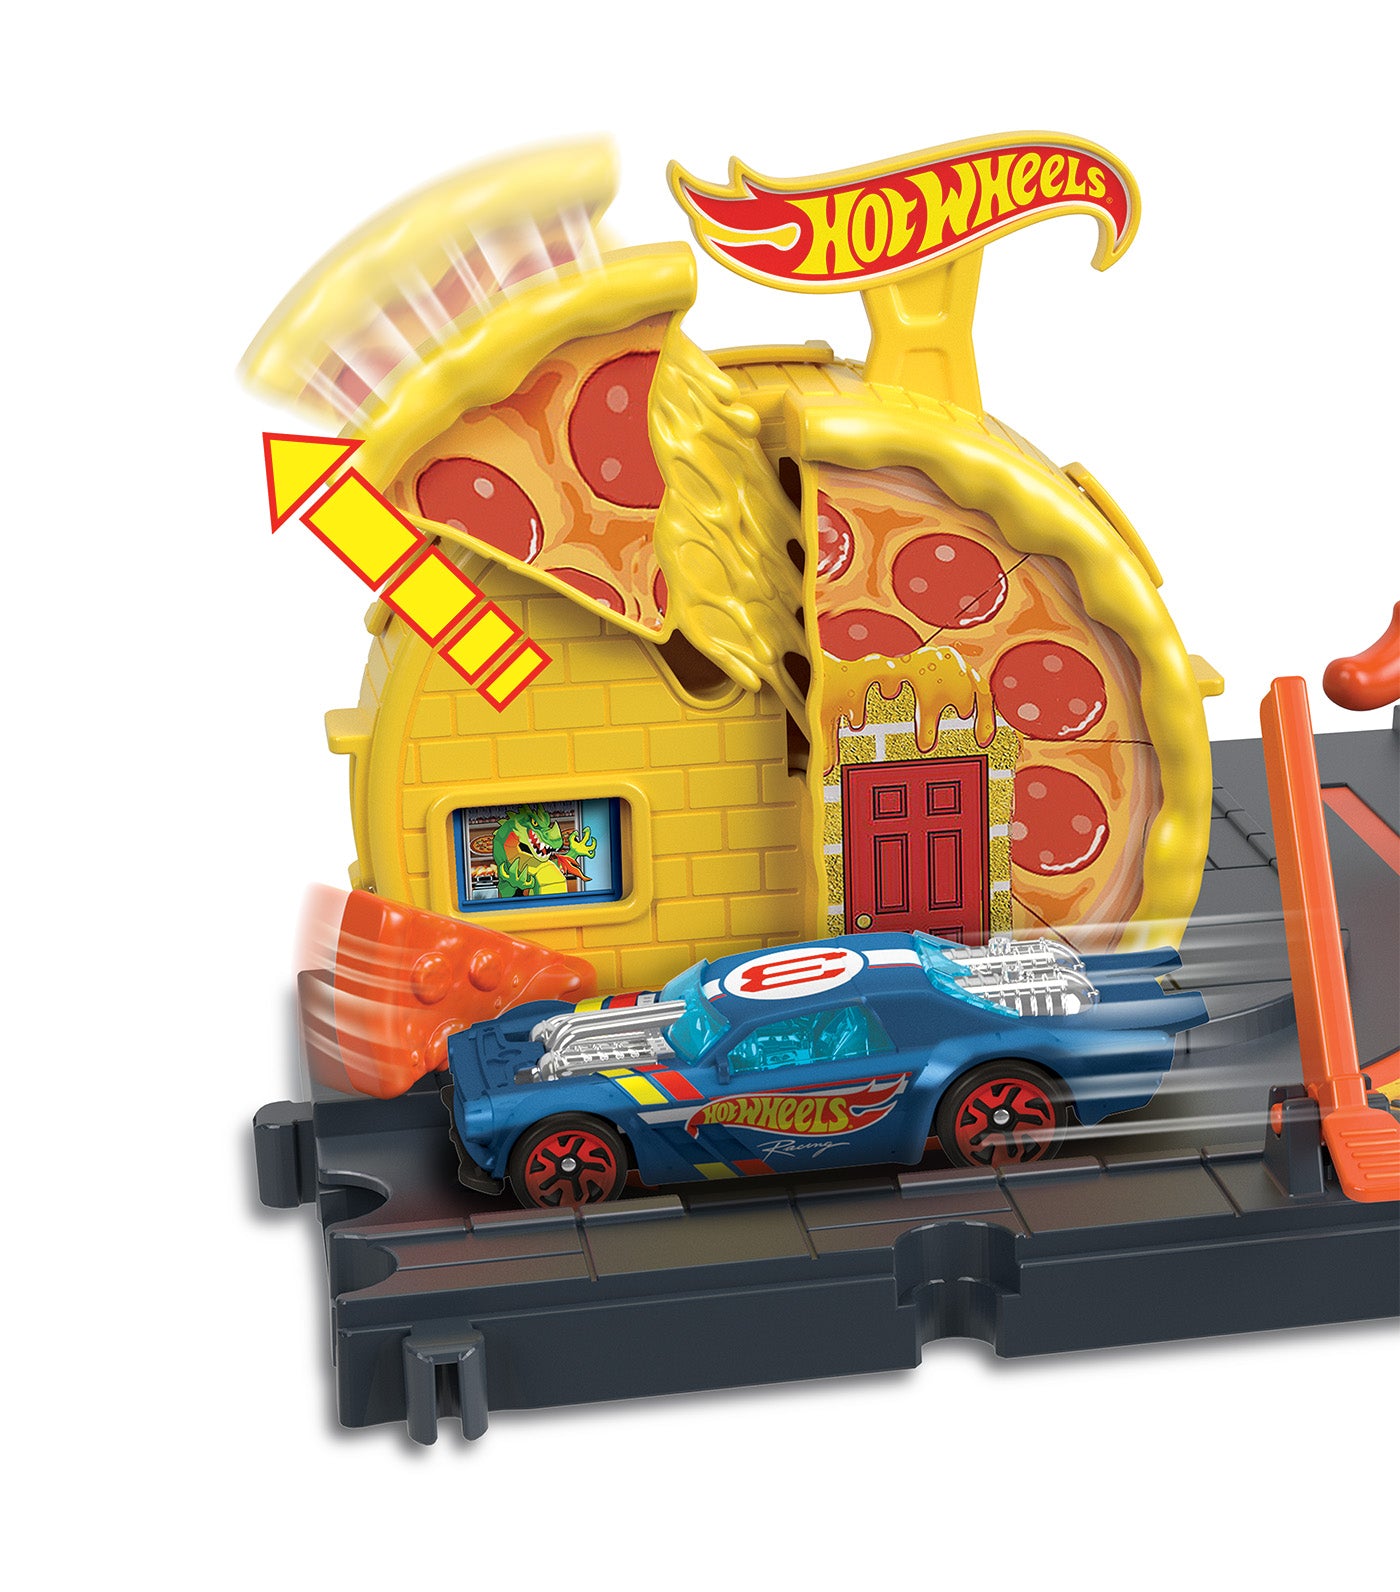 Speedy Pizza Pick-Up